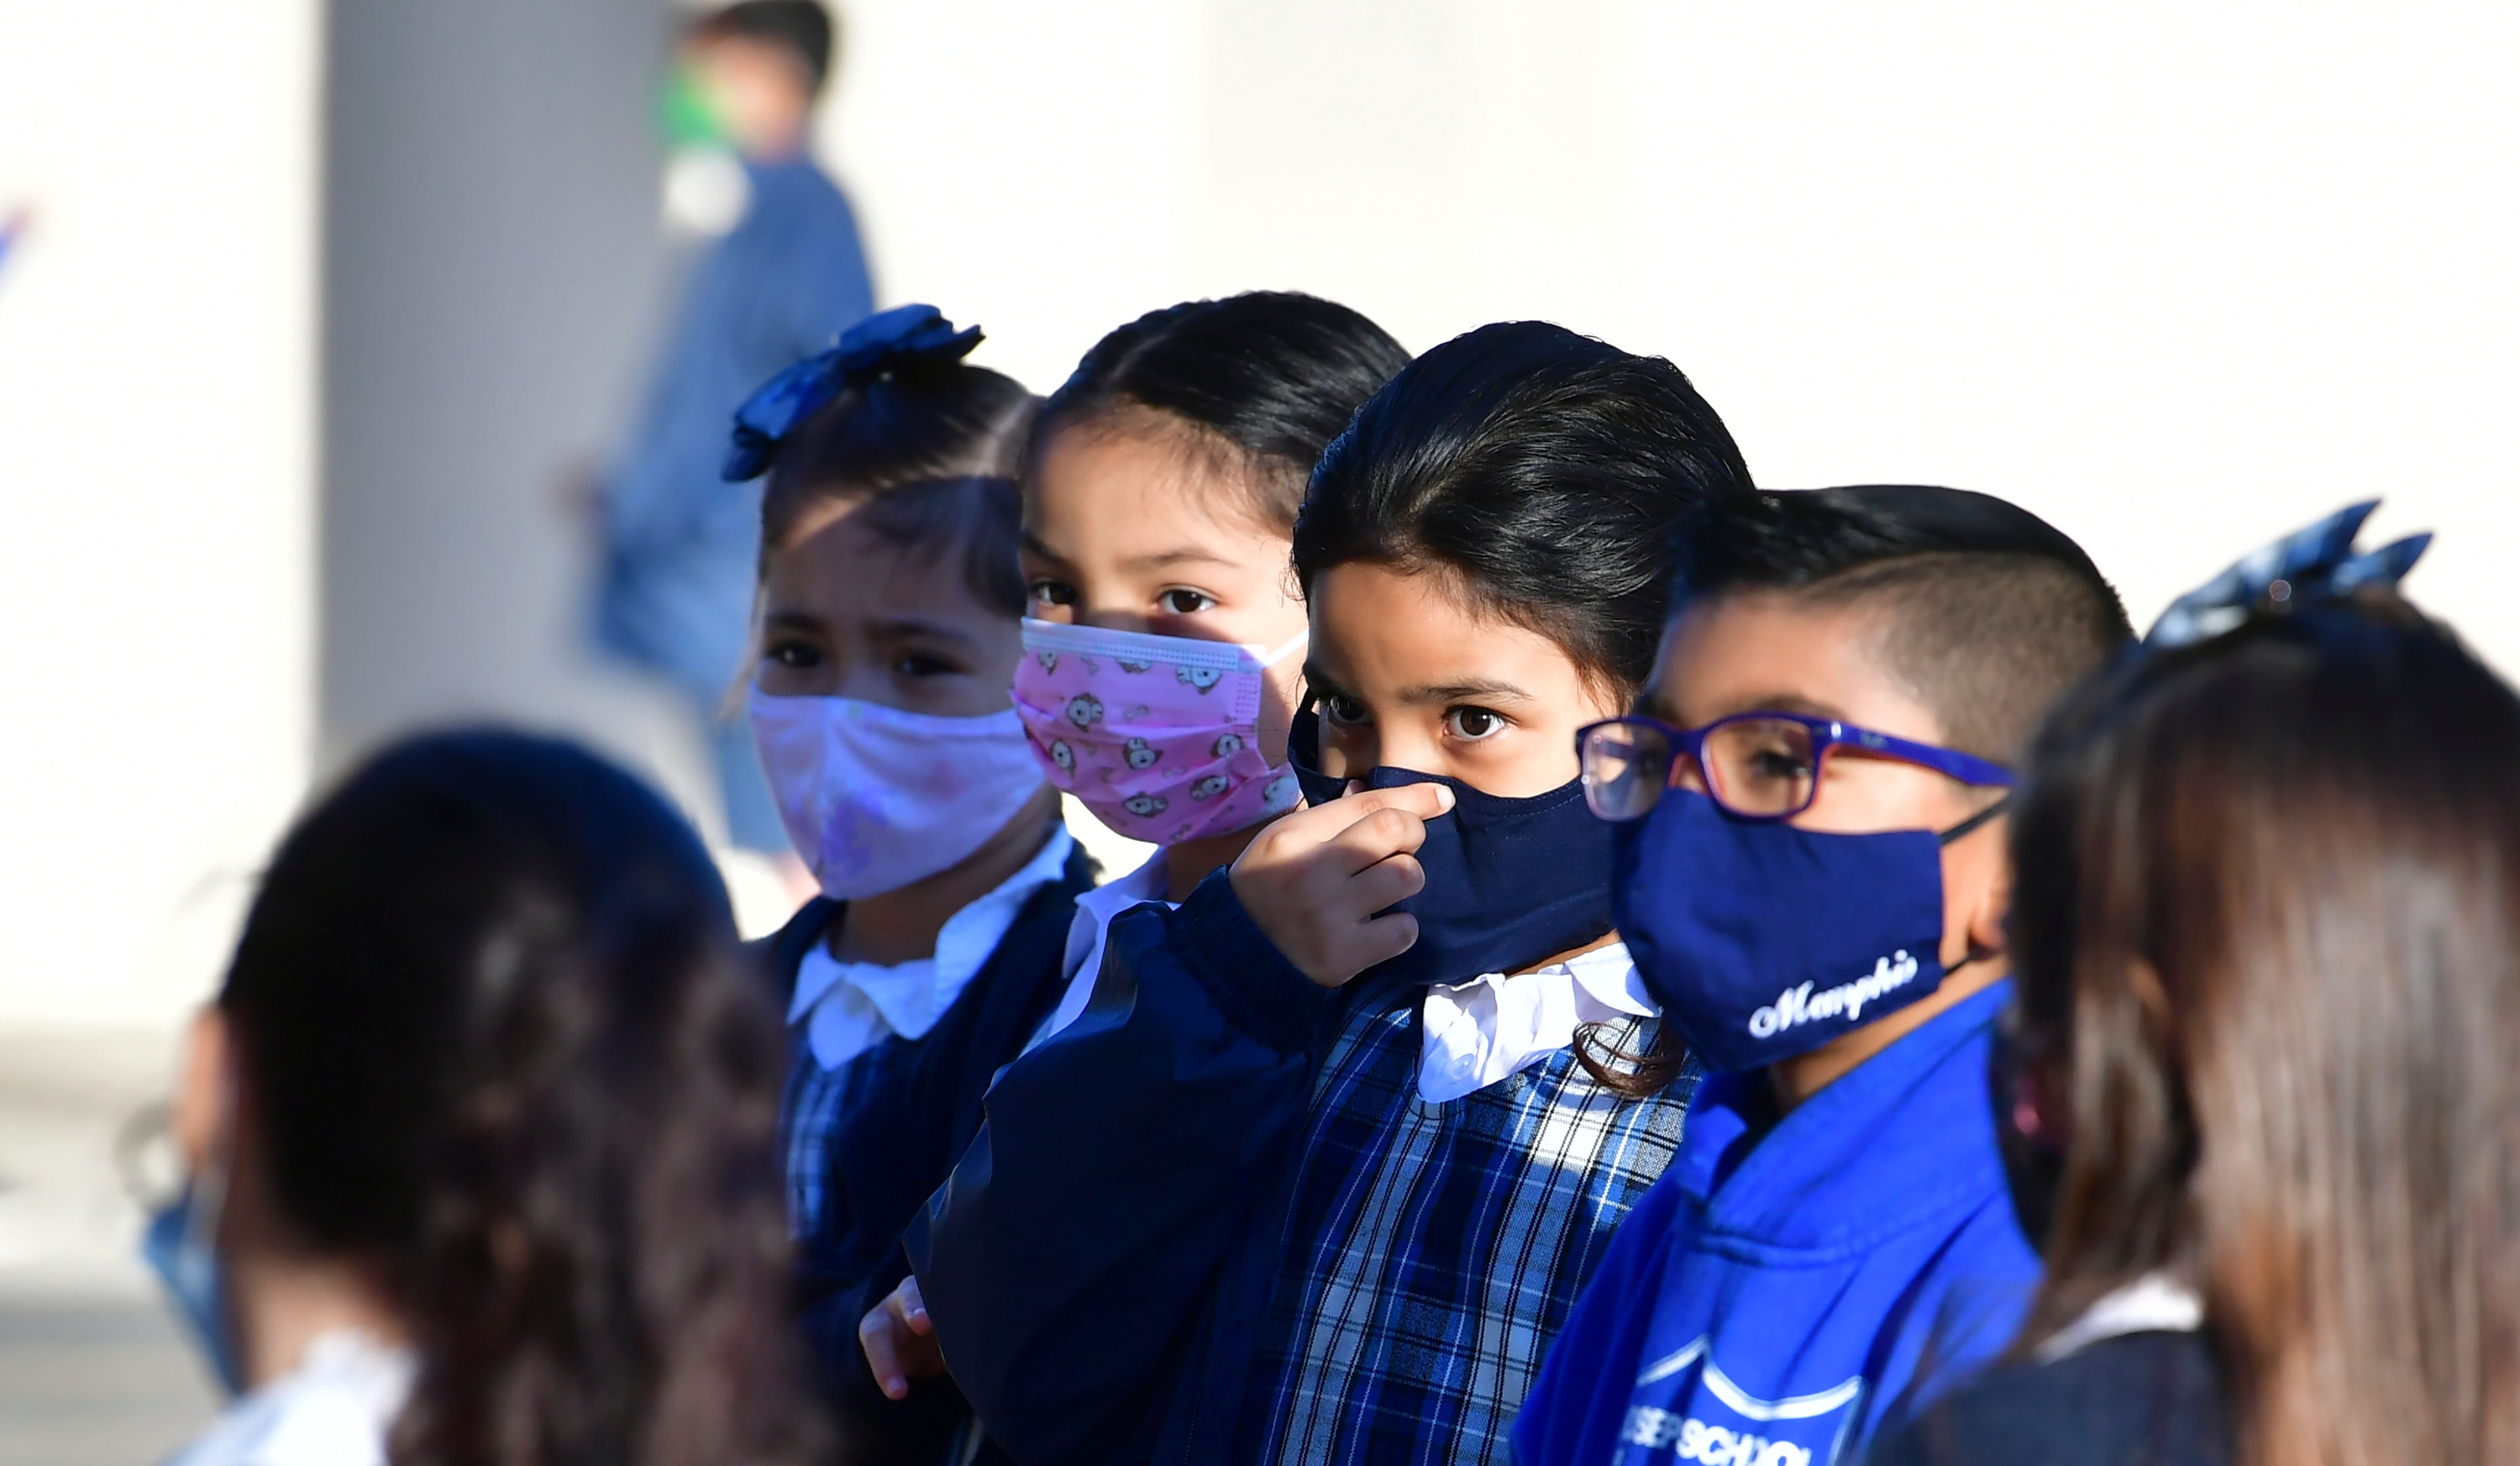 School children wear masks during COVID-19 pandemic